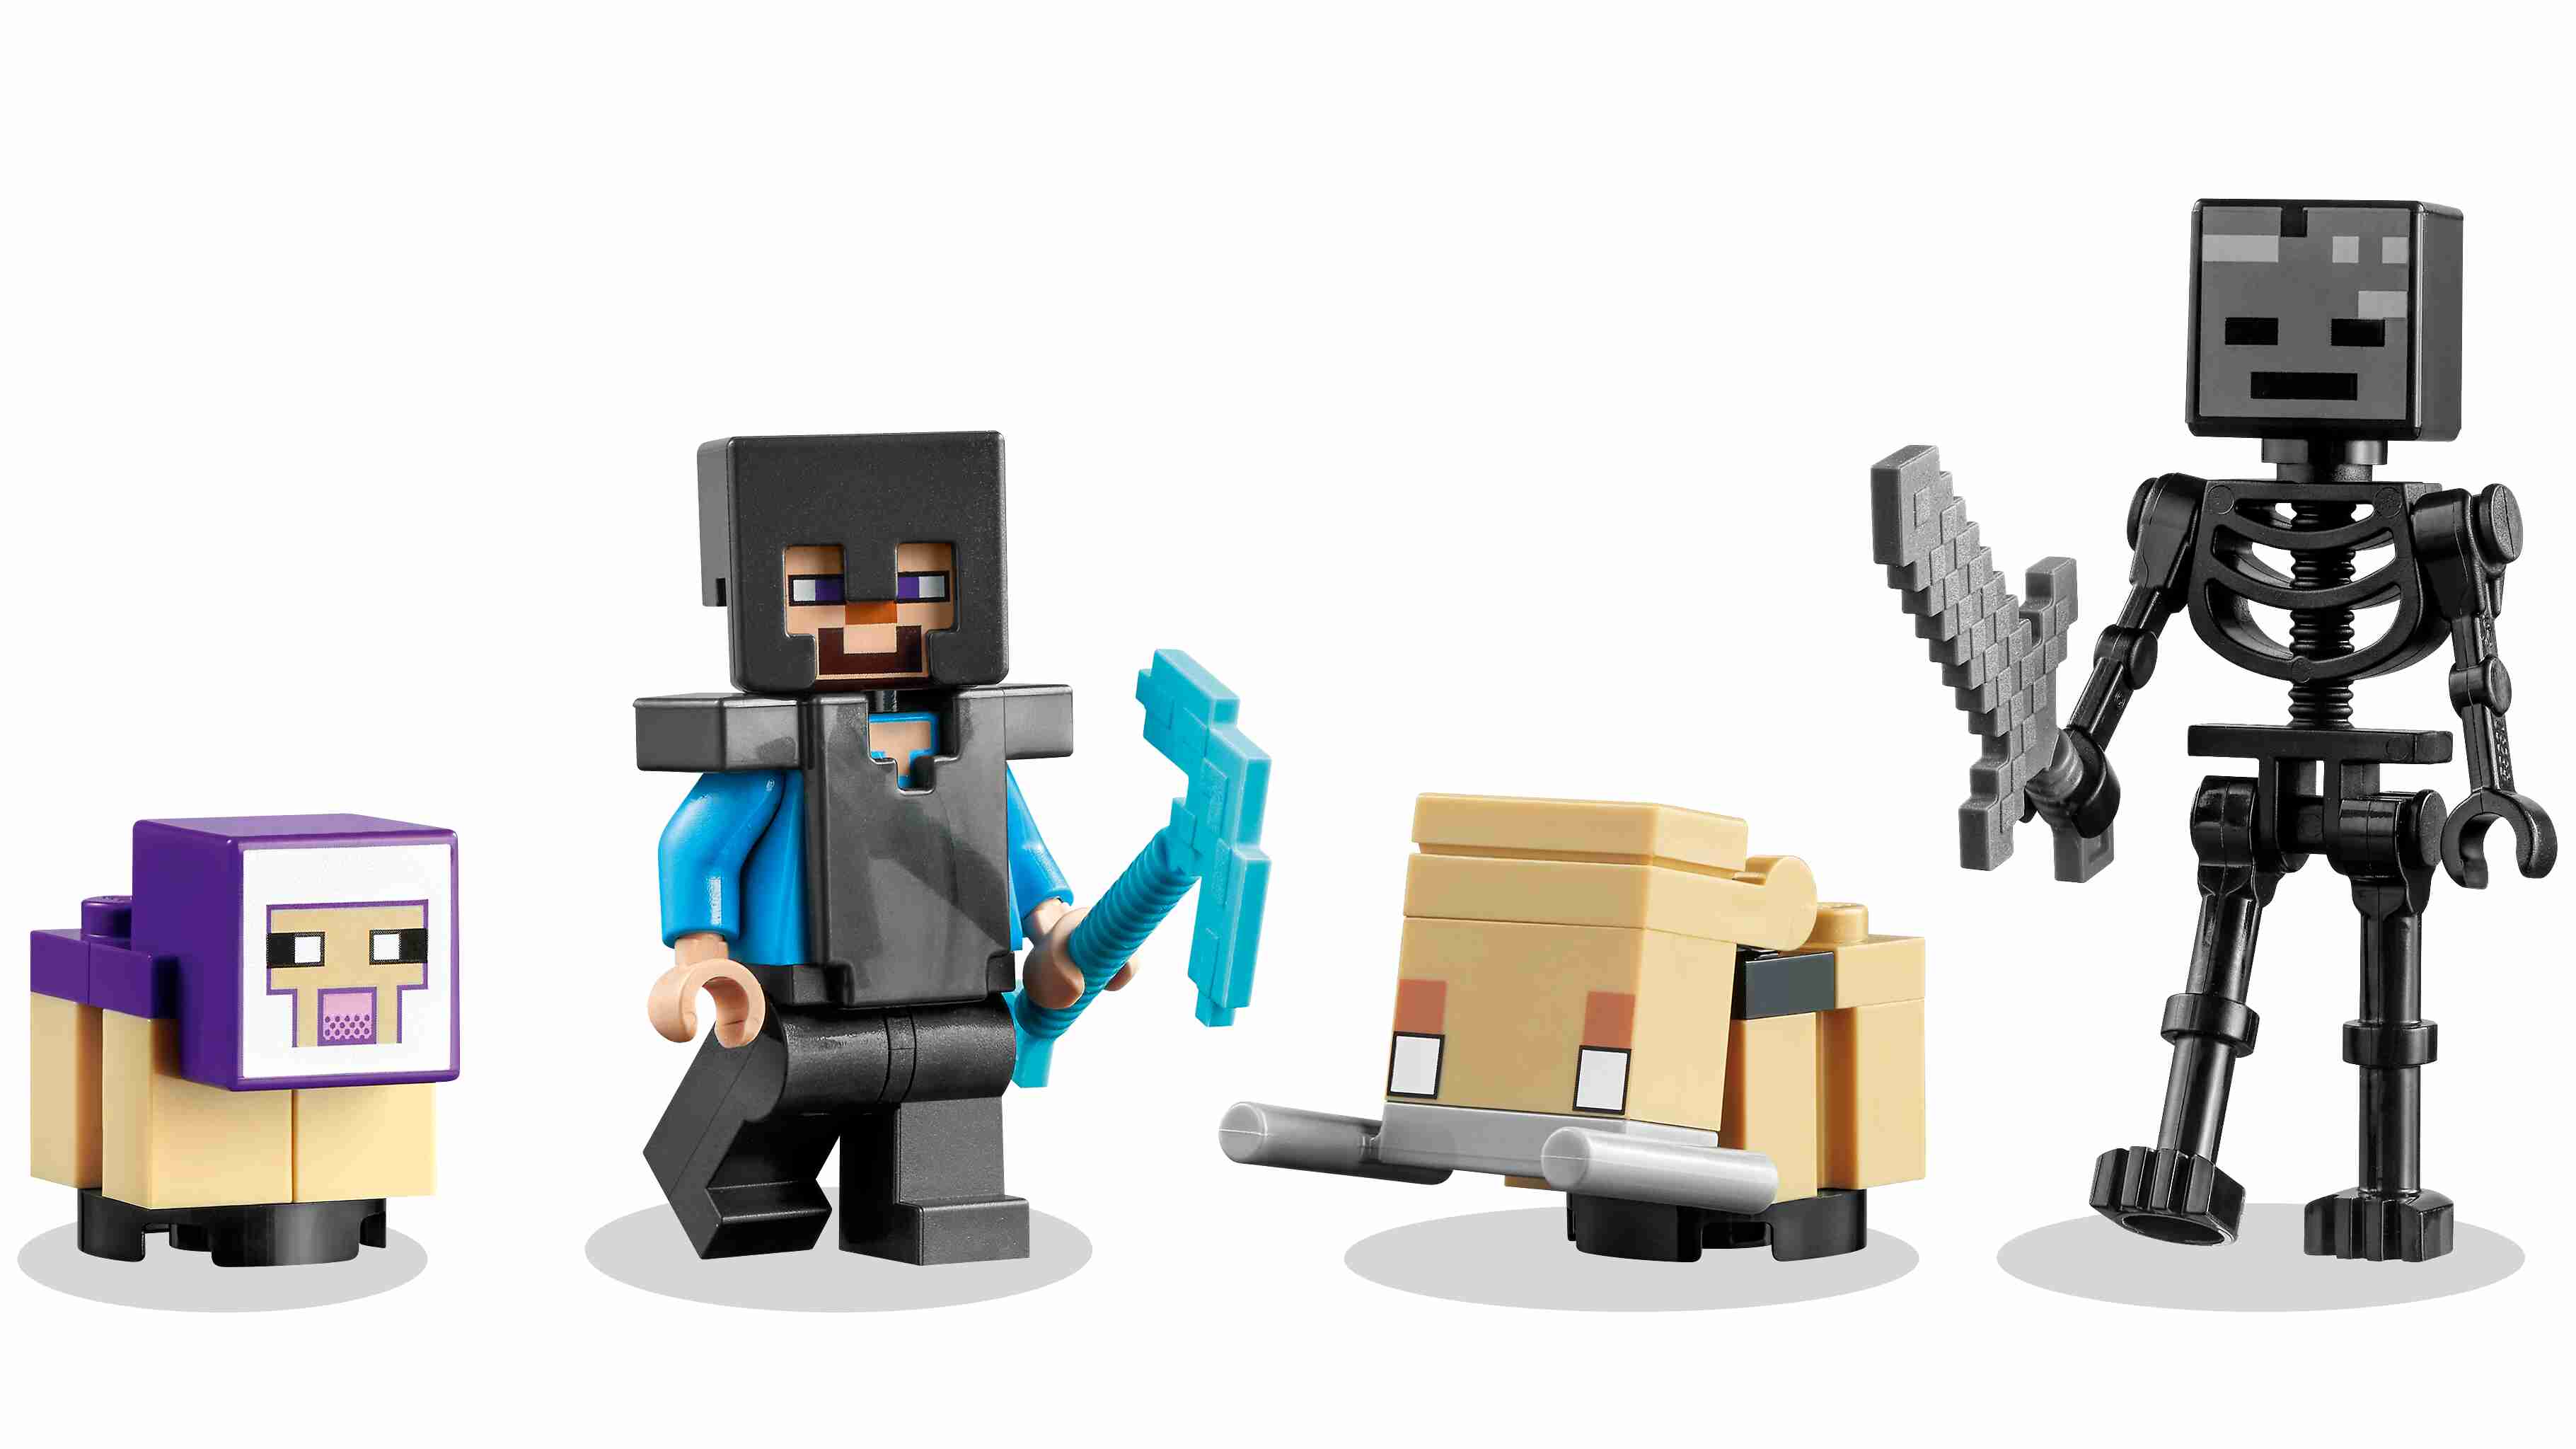 LEGO 21172 Lobigo.co.uk: Ruined skeleton: Steve, The hoglin, wither Minecraft Portal, sheep, Toys